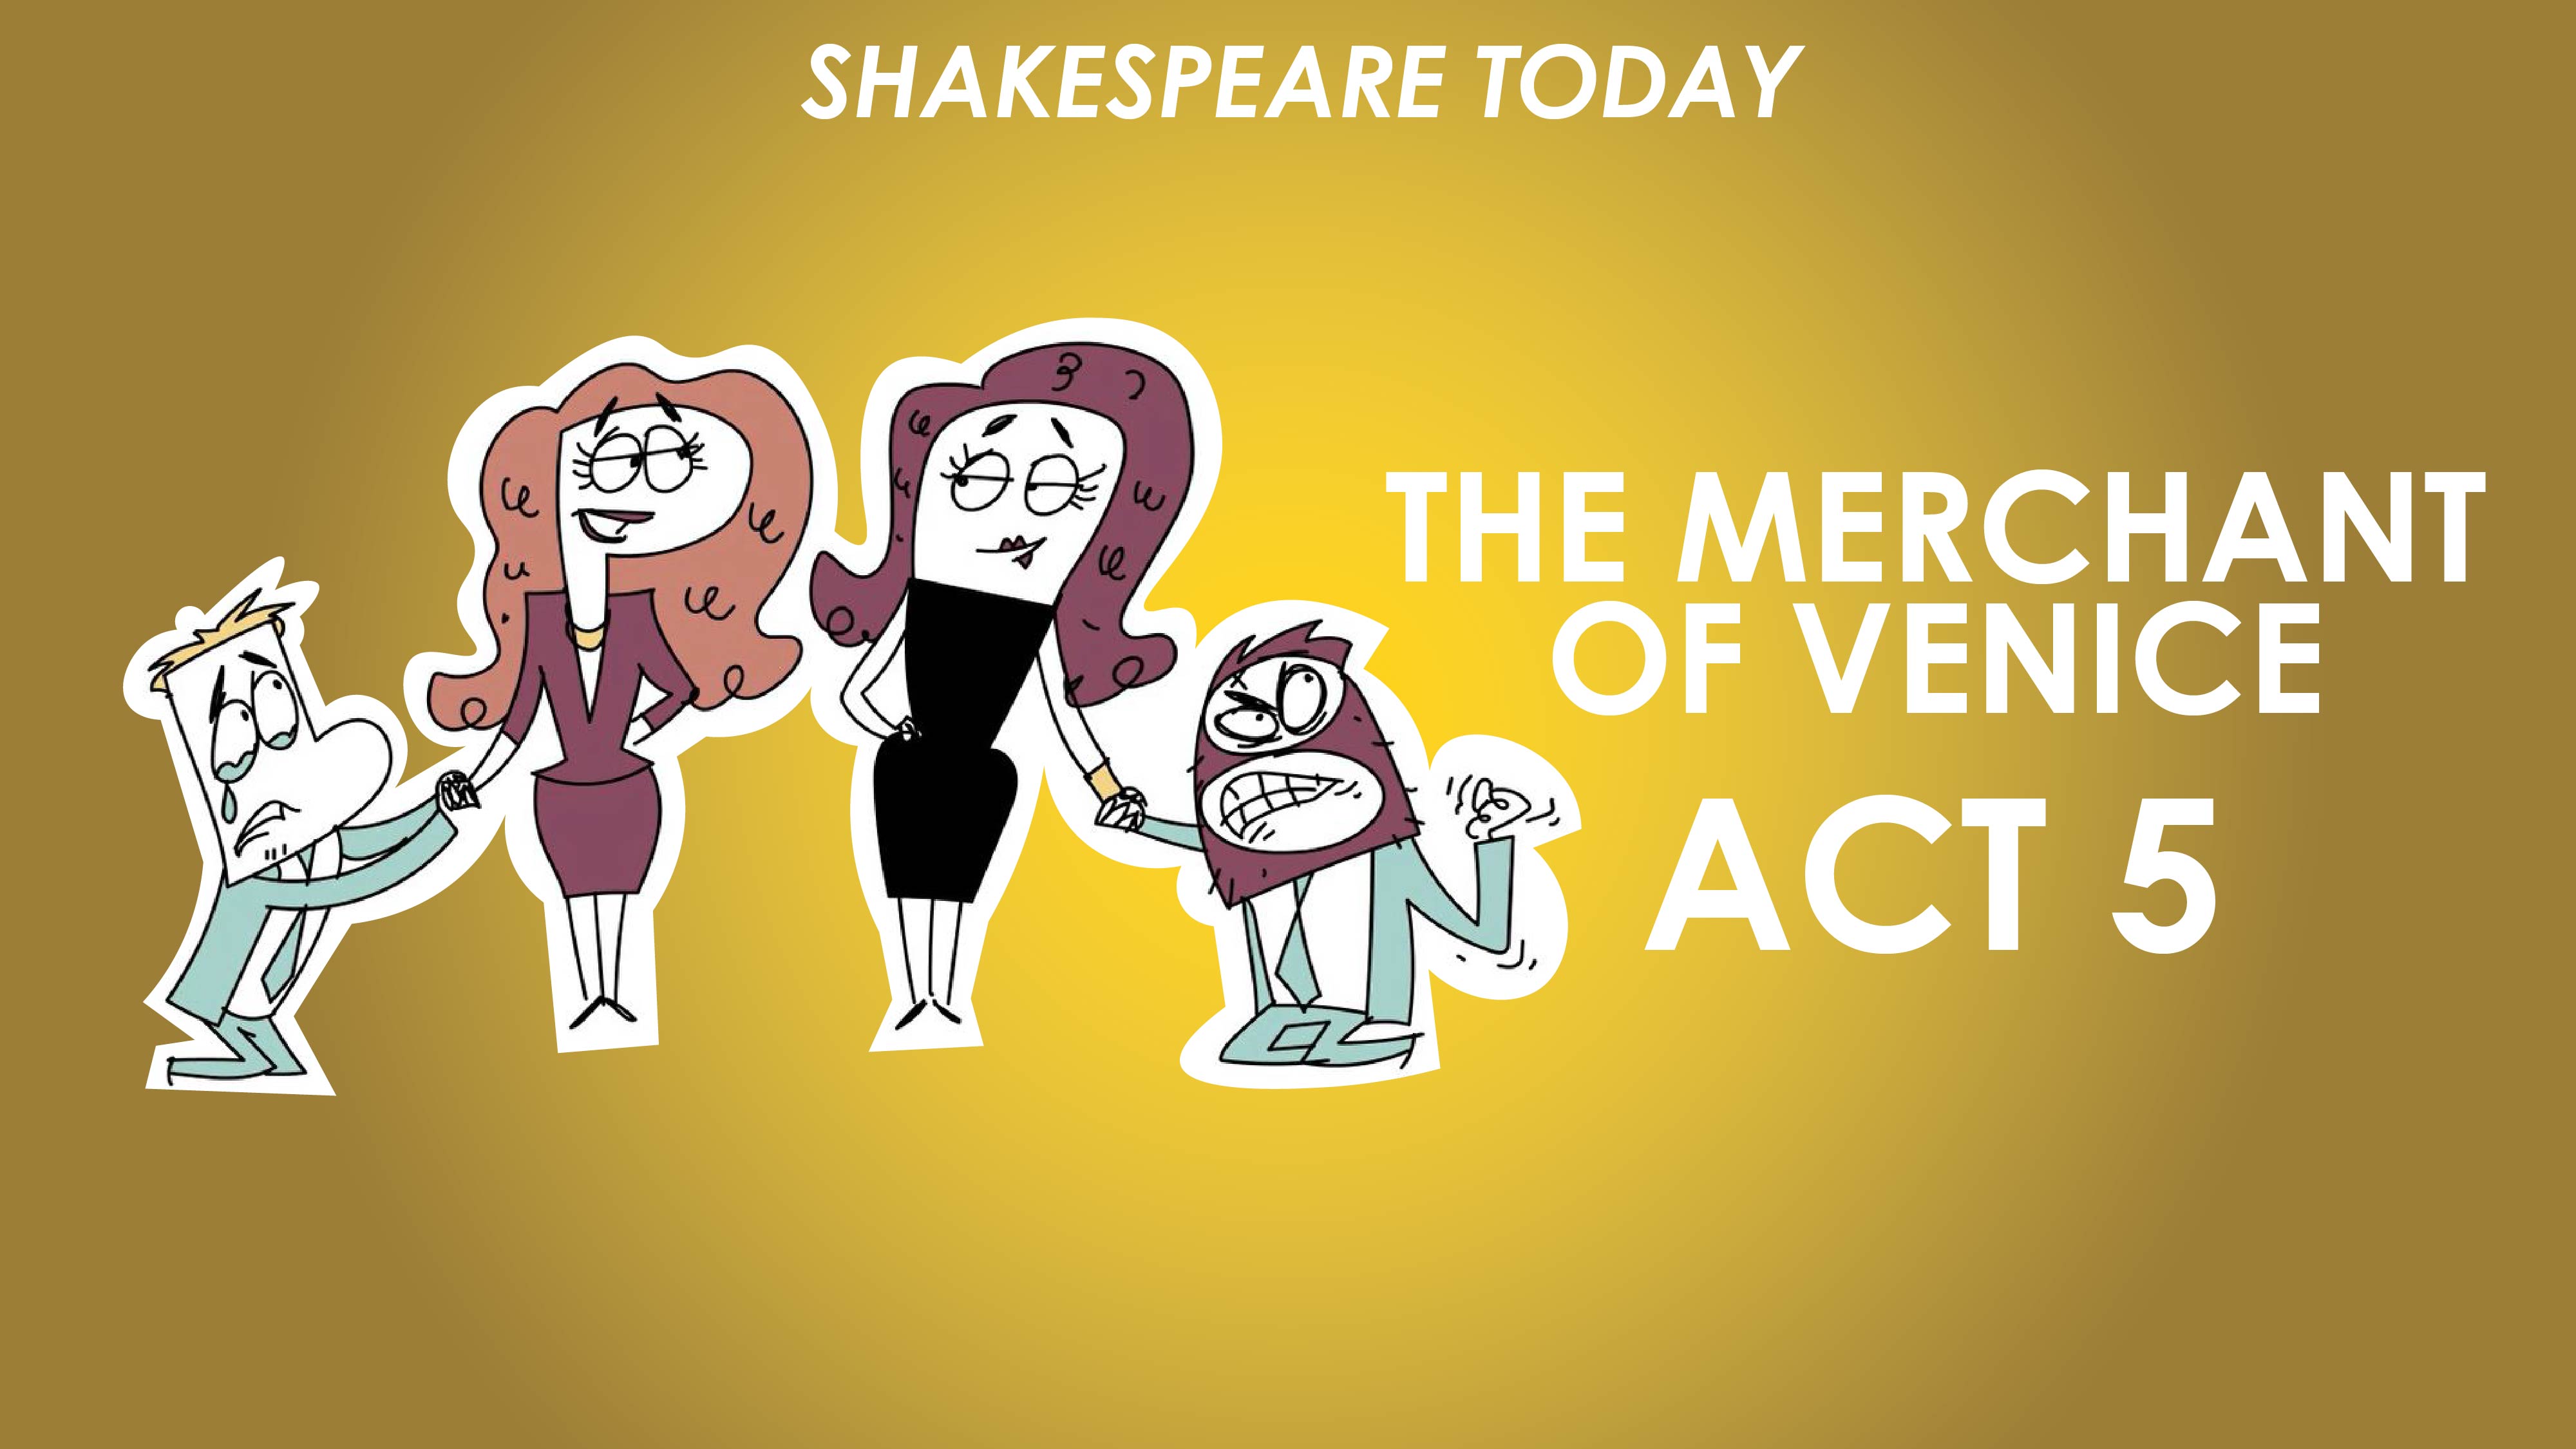 The Merchant of Venice Act 5 Summary - Shakespeare Today Series